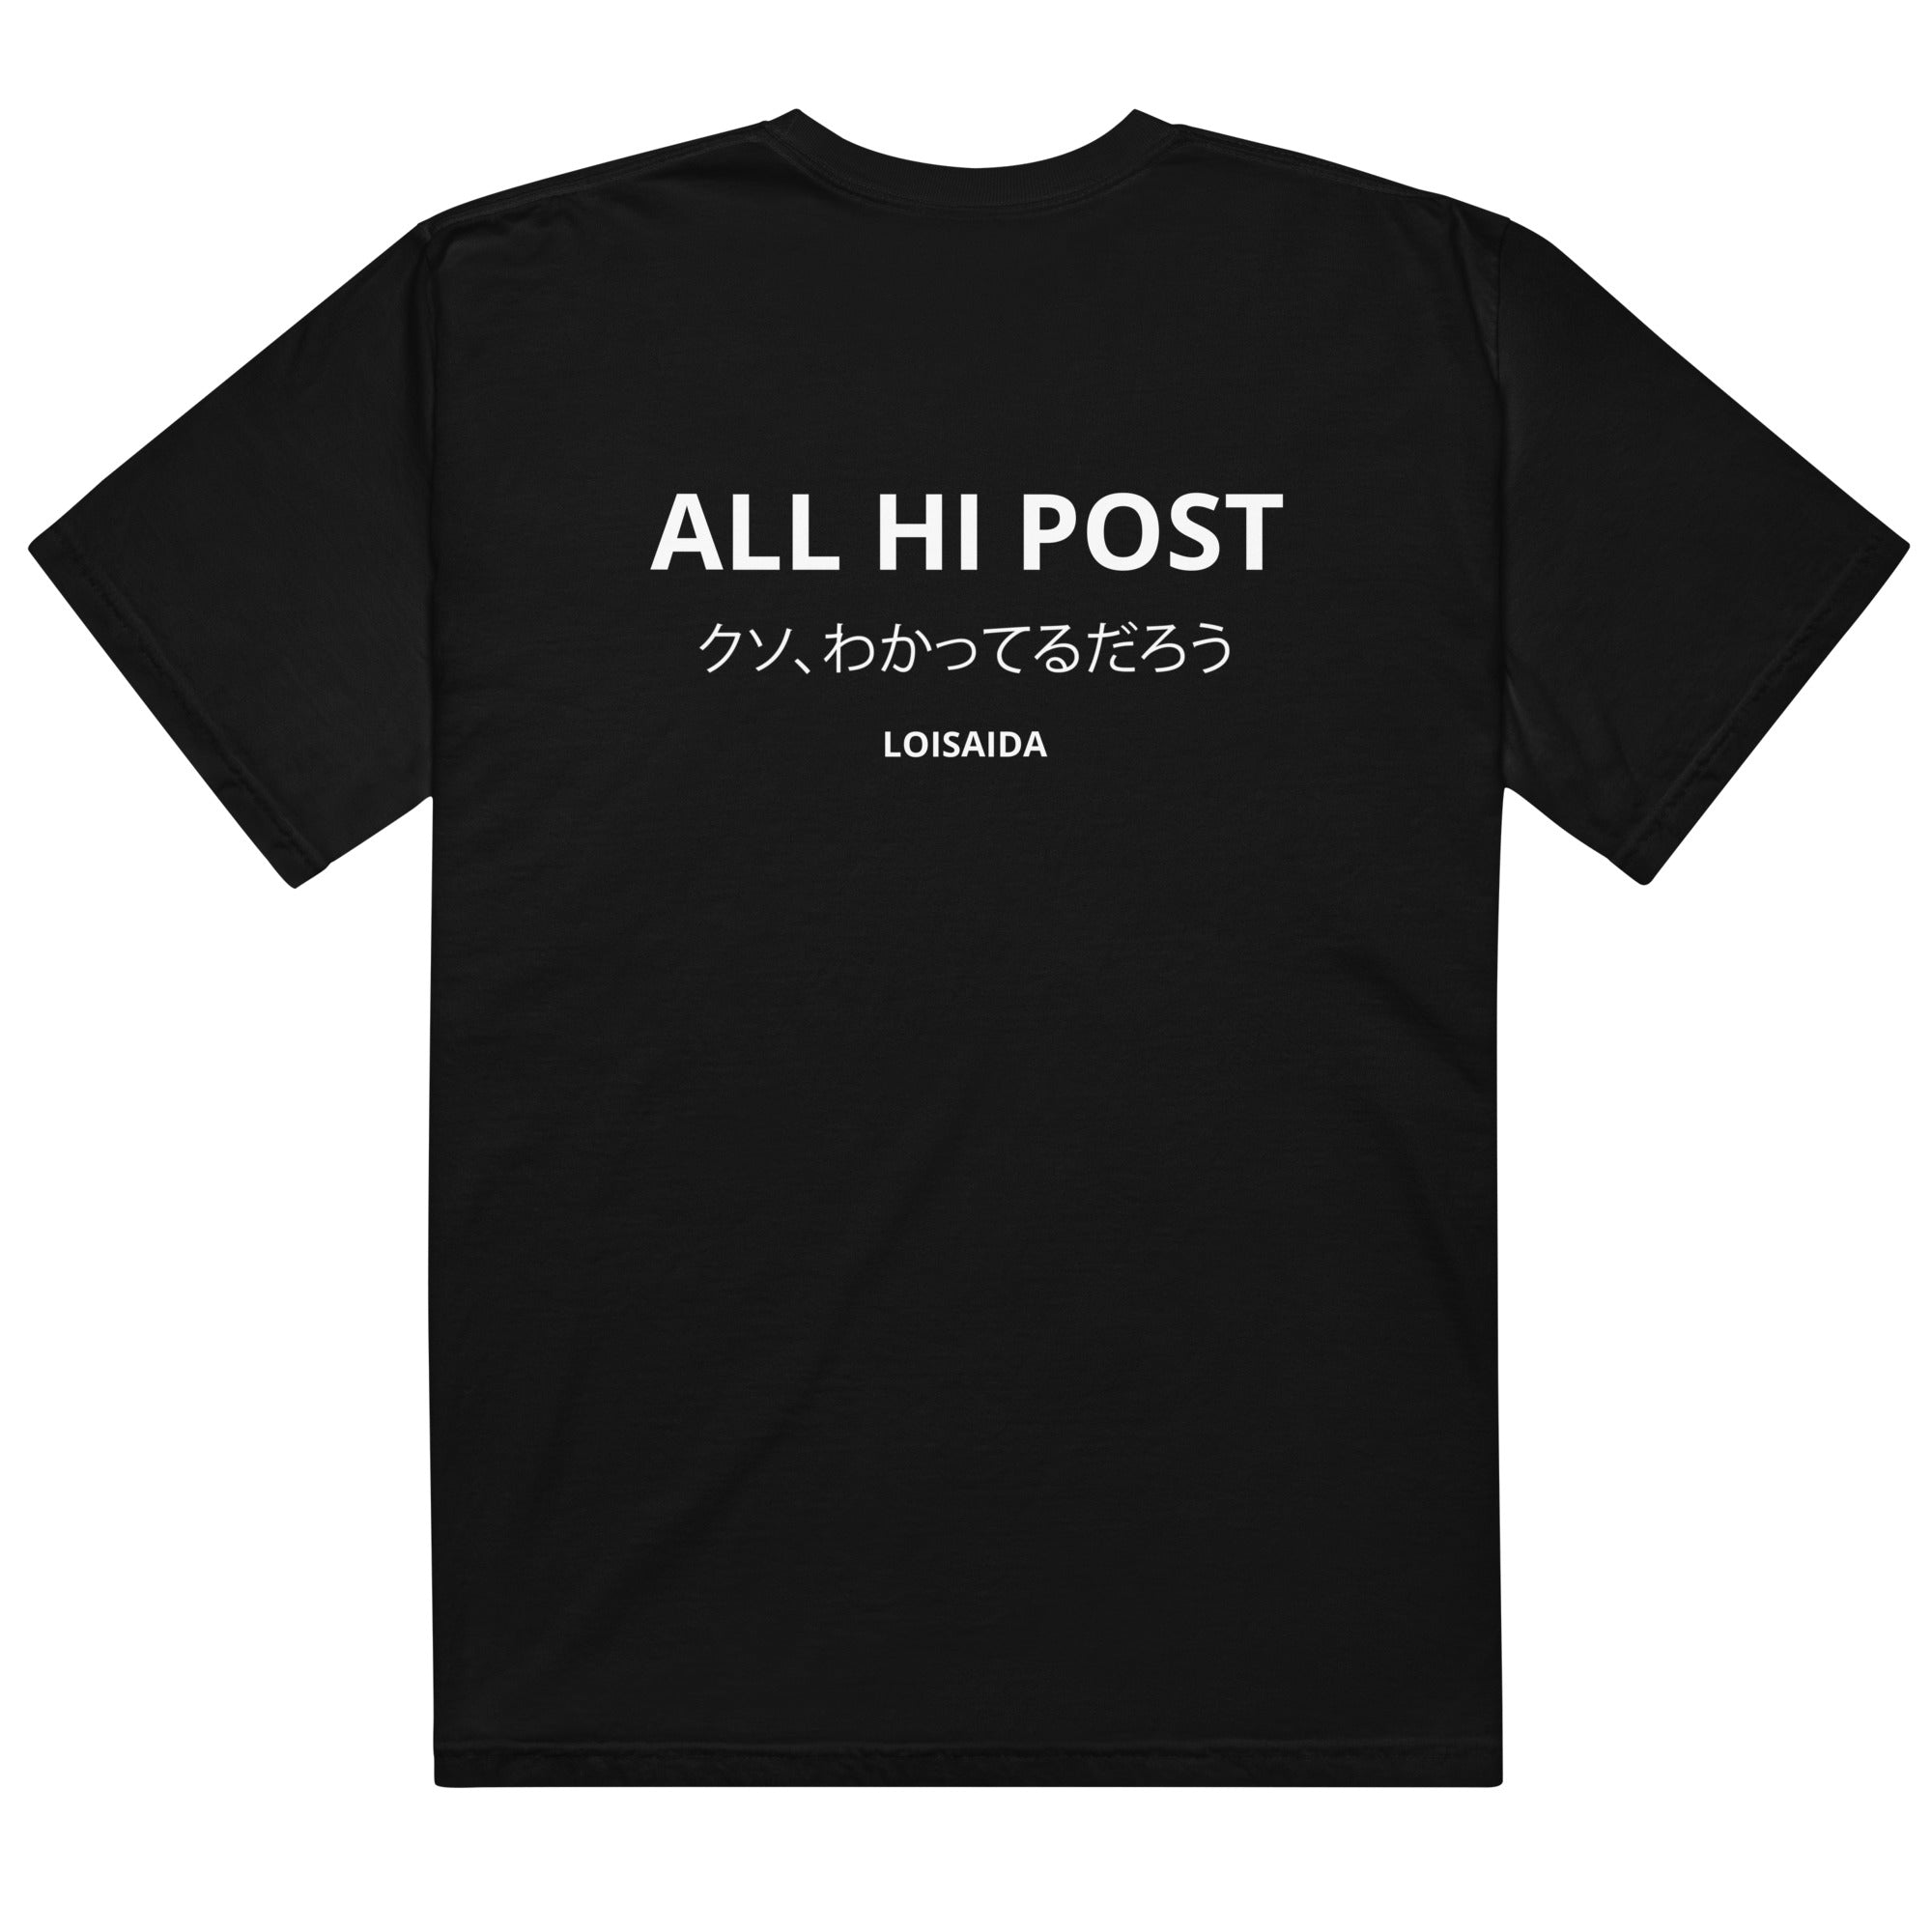 Hi Post NO SAINTS Garment-dyed heavyweight t-shirt